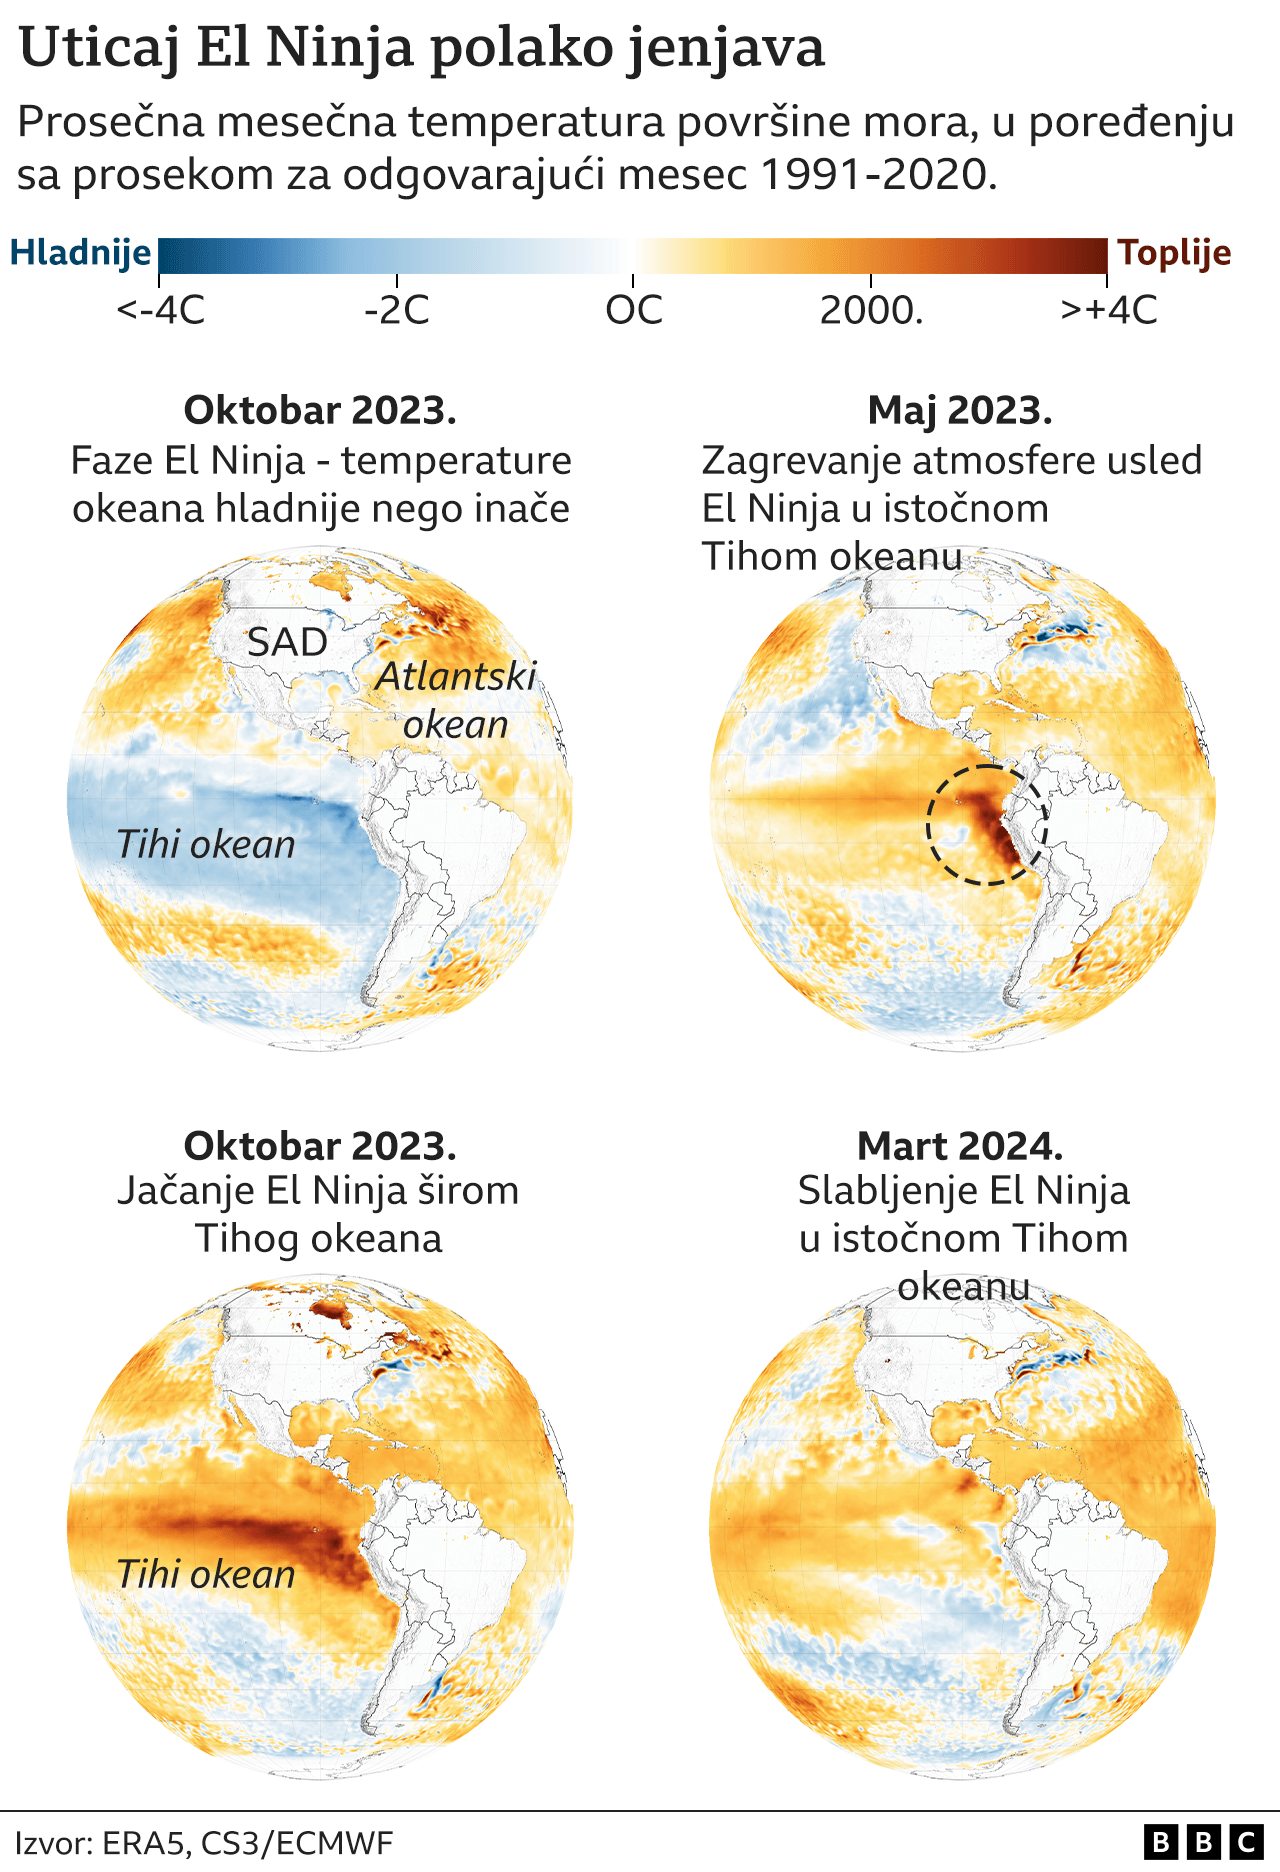 El Ninjo, klimatske promene